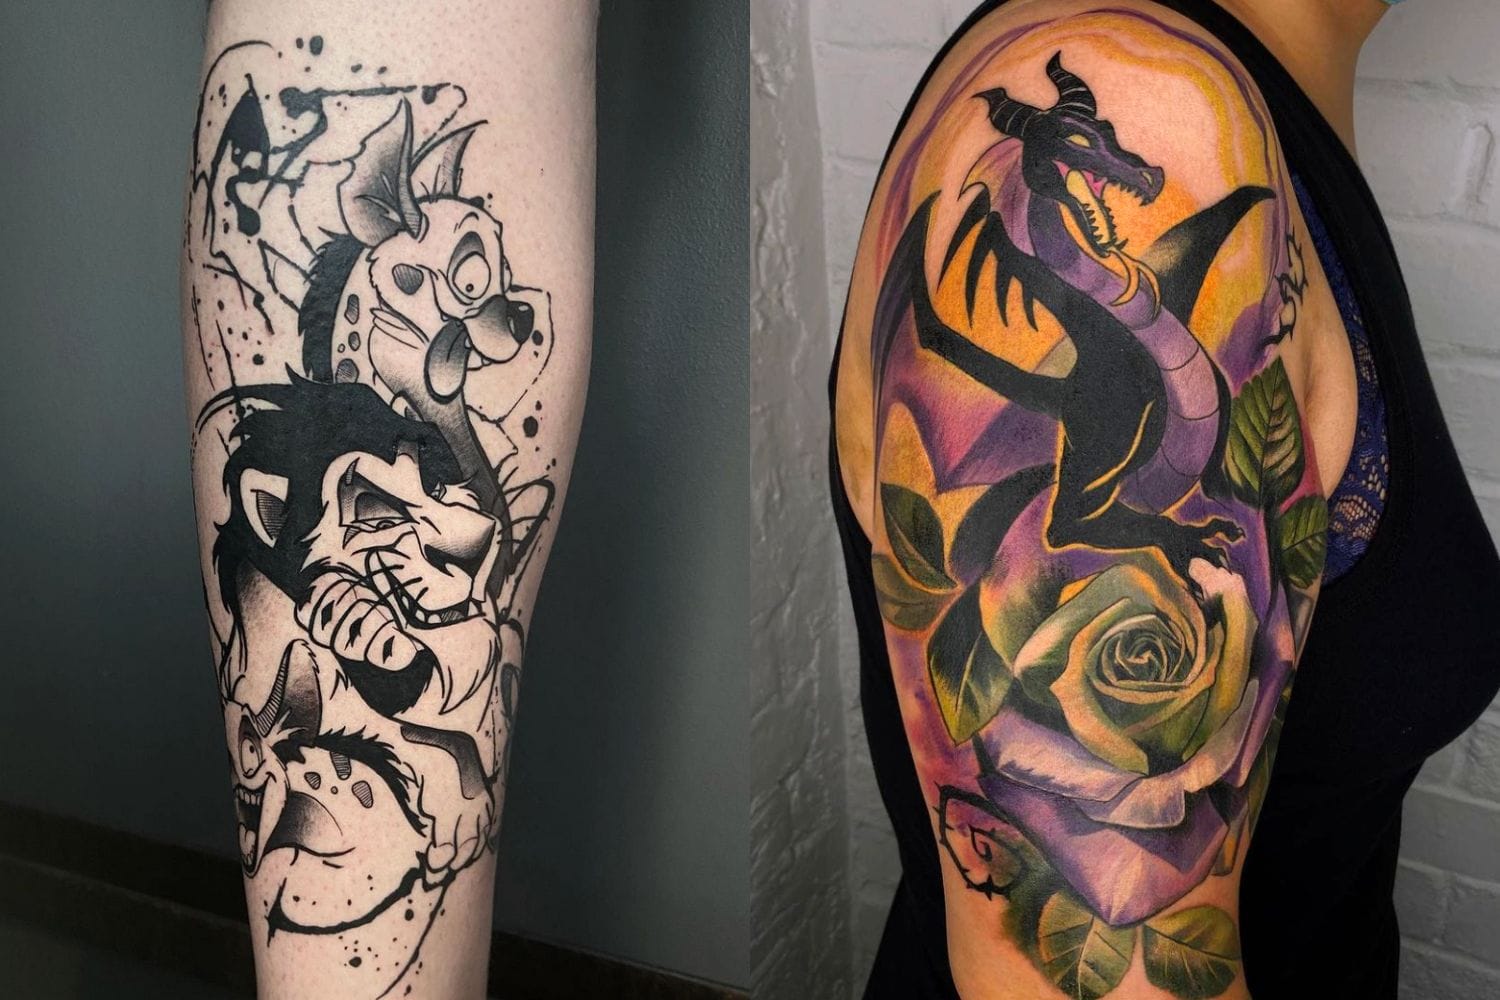 Finished this Scar and Hyenas piece #tattooartistsoftiktok #disneytatt... |  TikTok